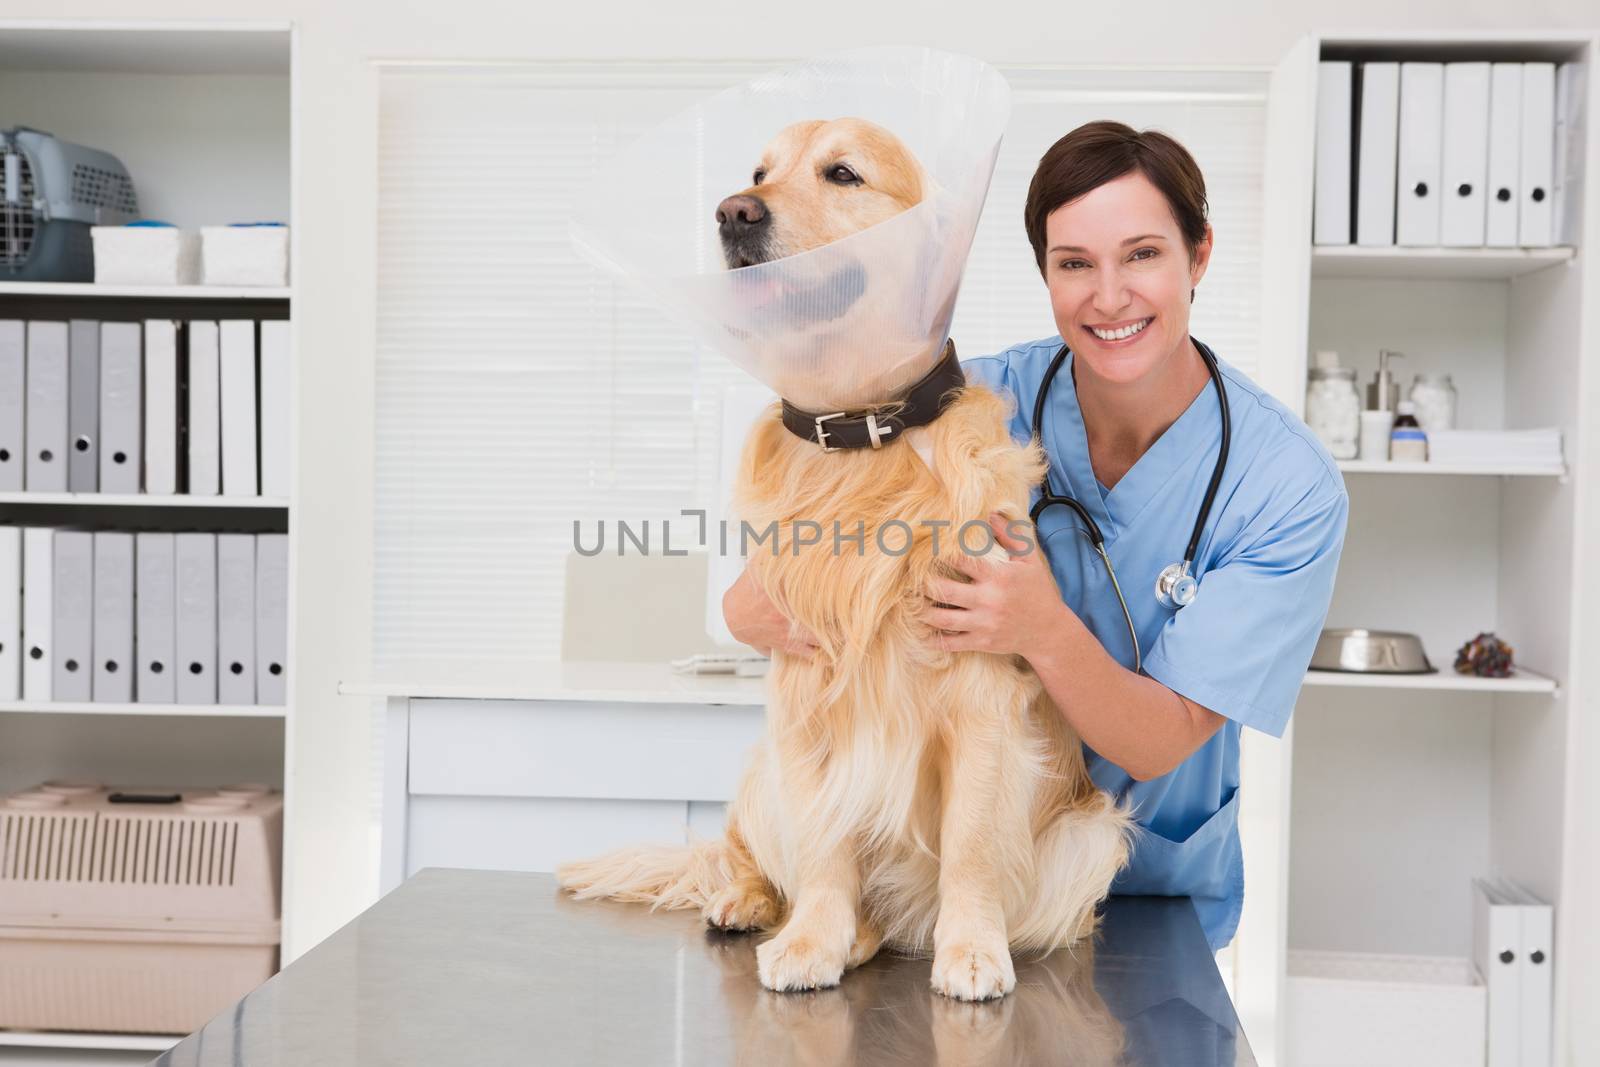 Smiling veterinarian examining a cute dog in medical office